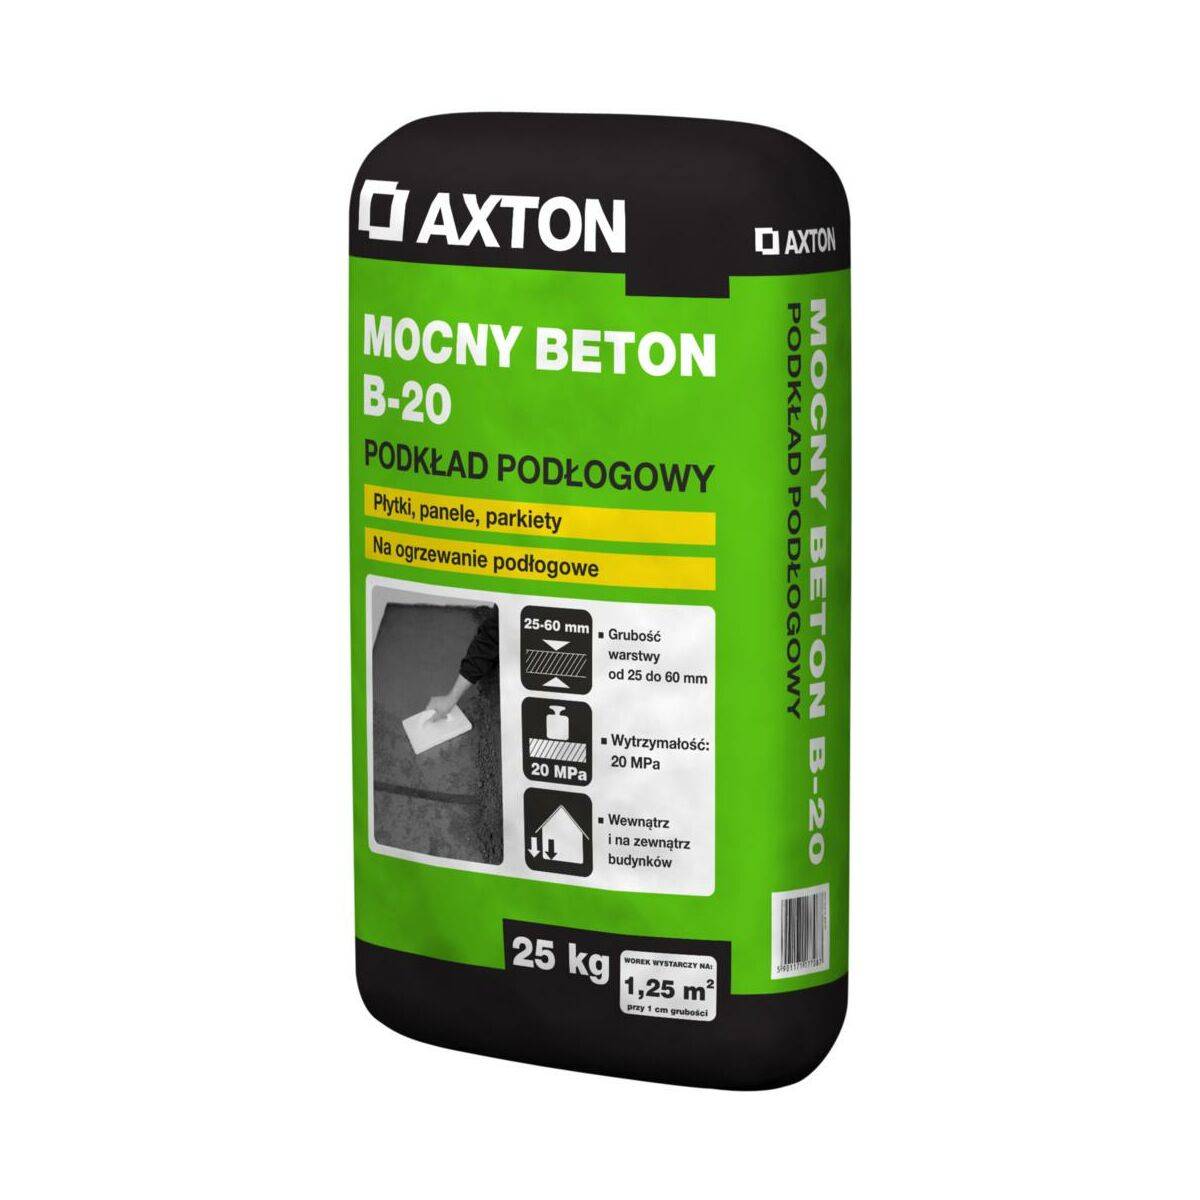 Пескобетон axton: характеристика и преимущества сухой смеси акстон м300, применение пескобетона